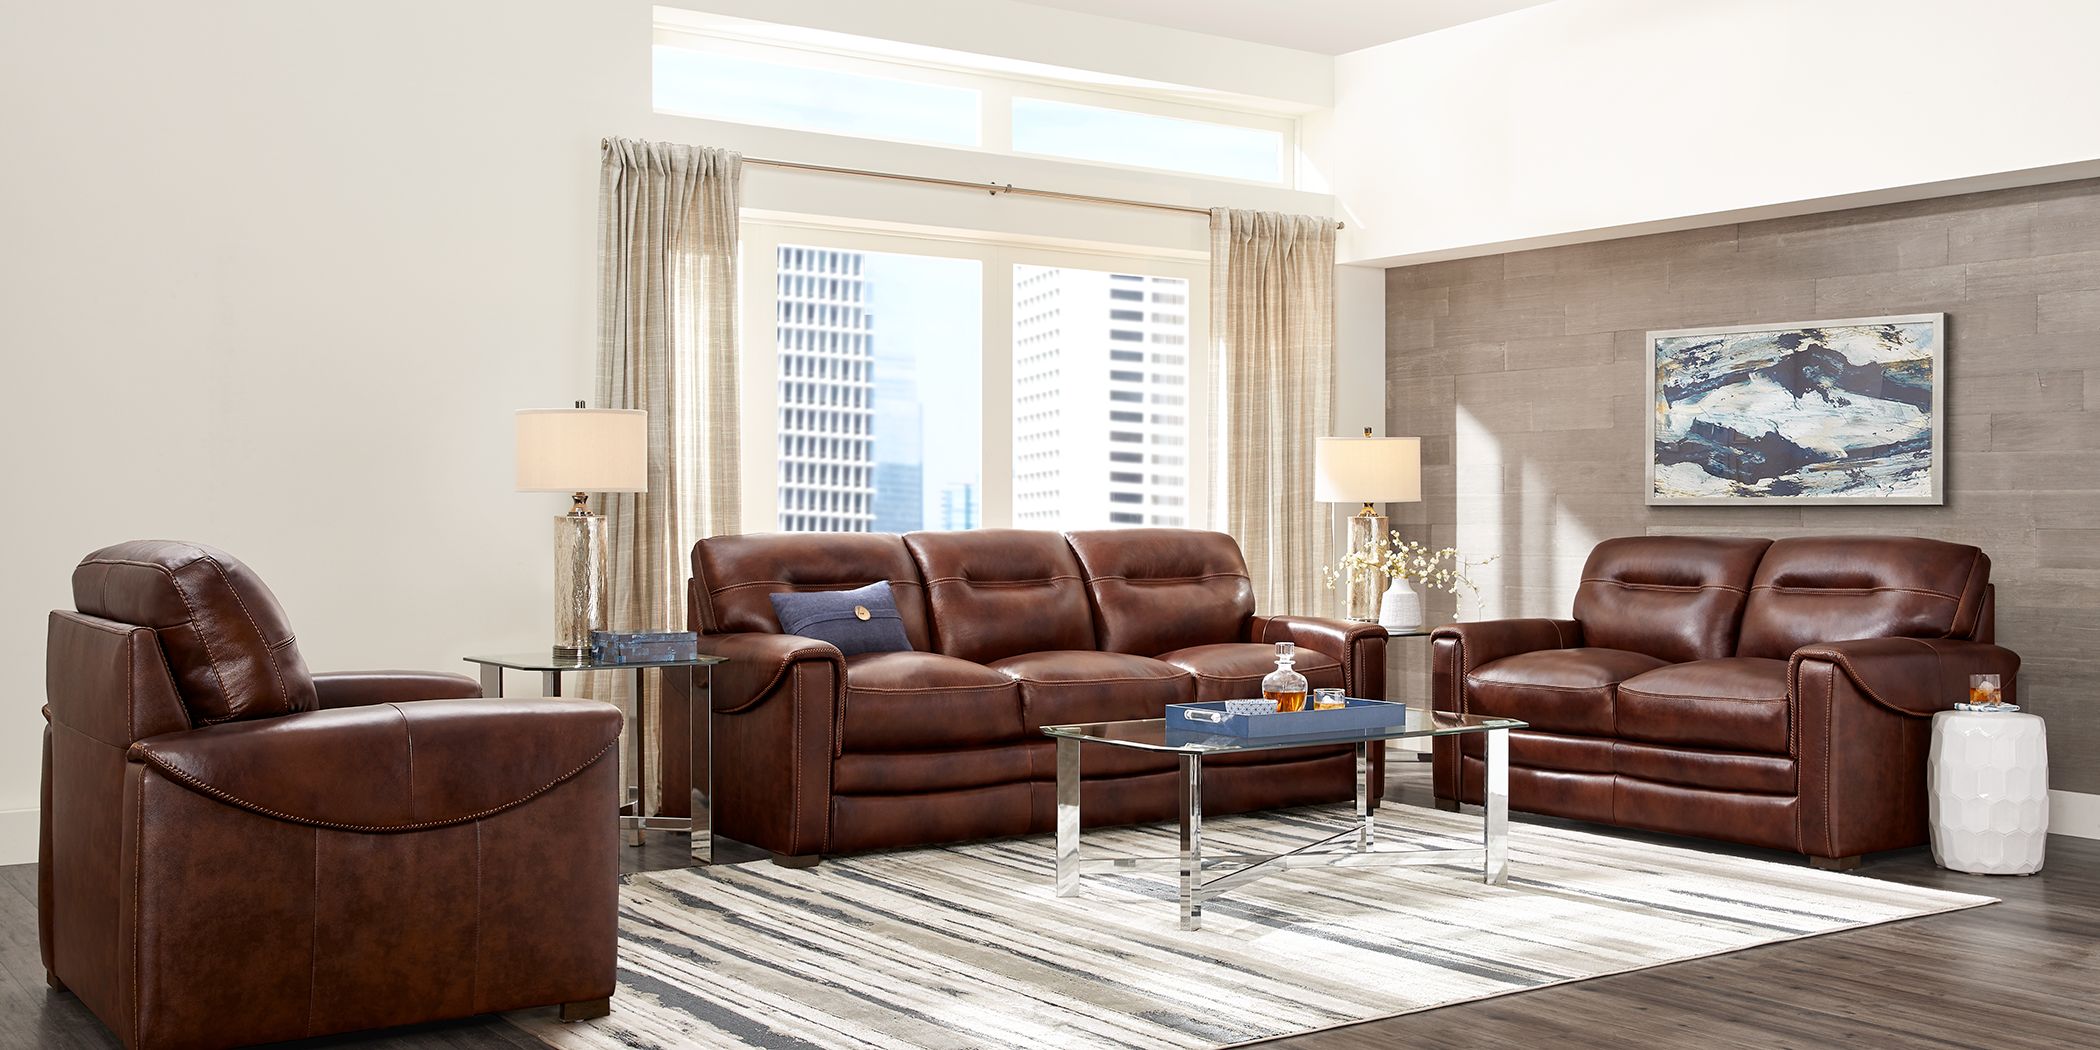 3 Piece Living Room Sofa Sets Of Furniture